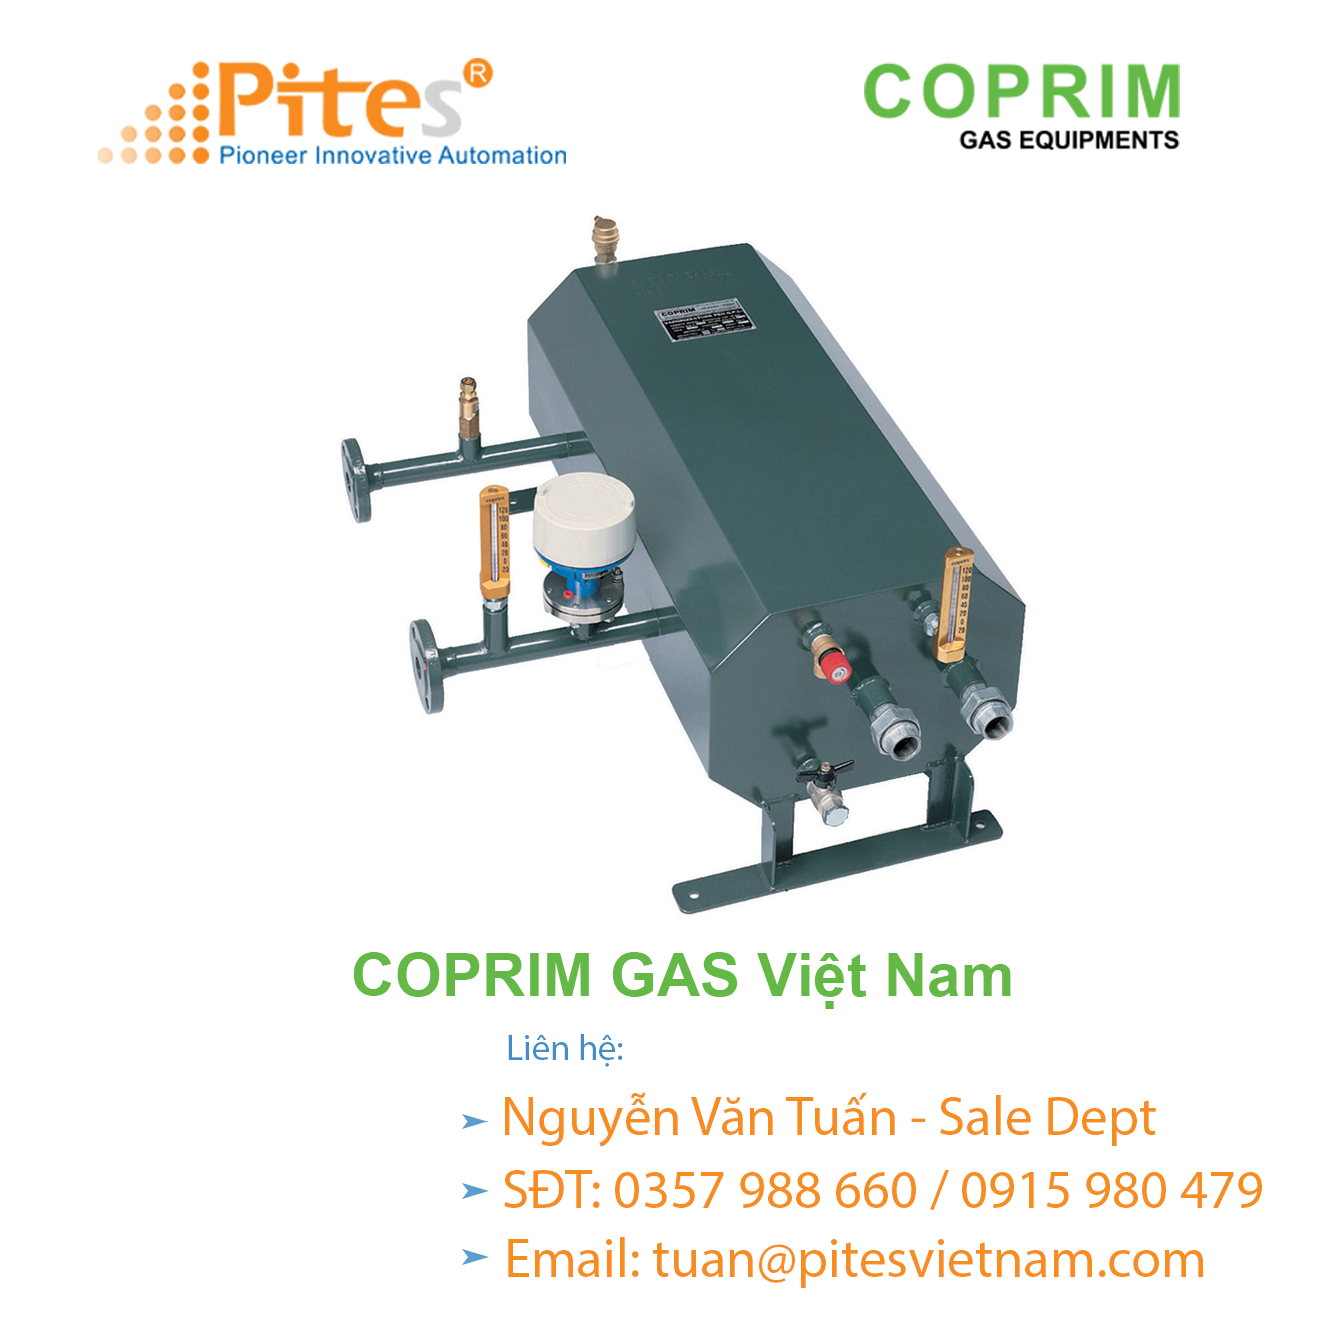 coprim-gas-vietnam-coprim-gas-viet-nam-dai-ly-coprim-gas-list-code-coprim-gas-part-1.png